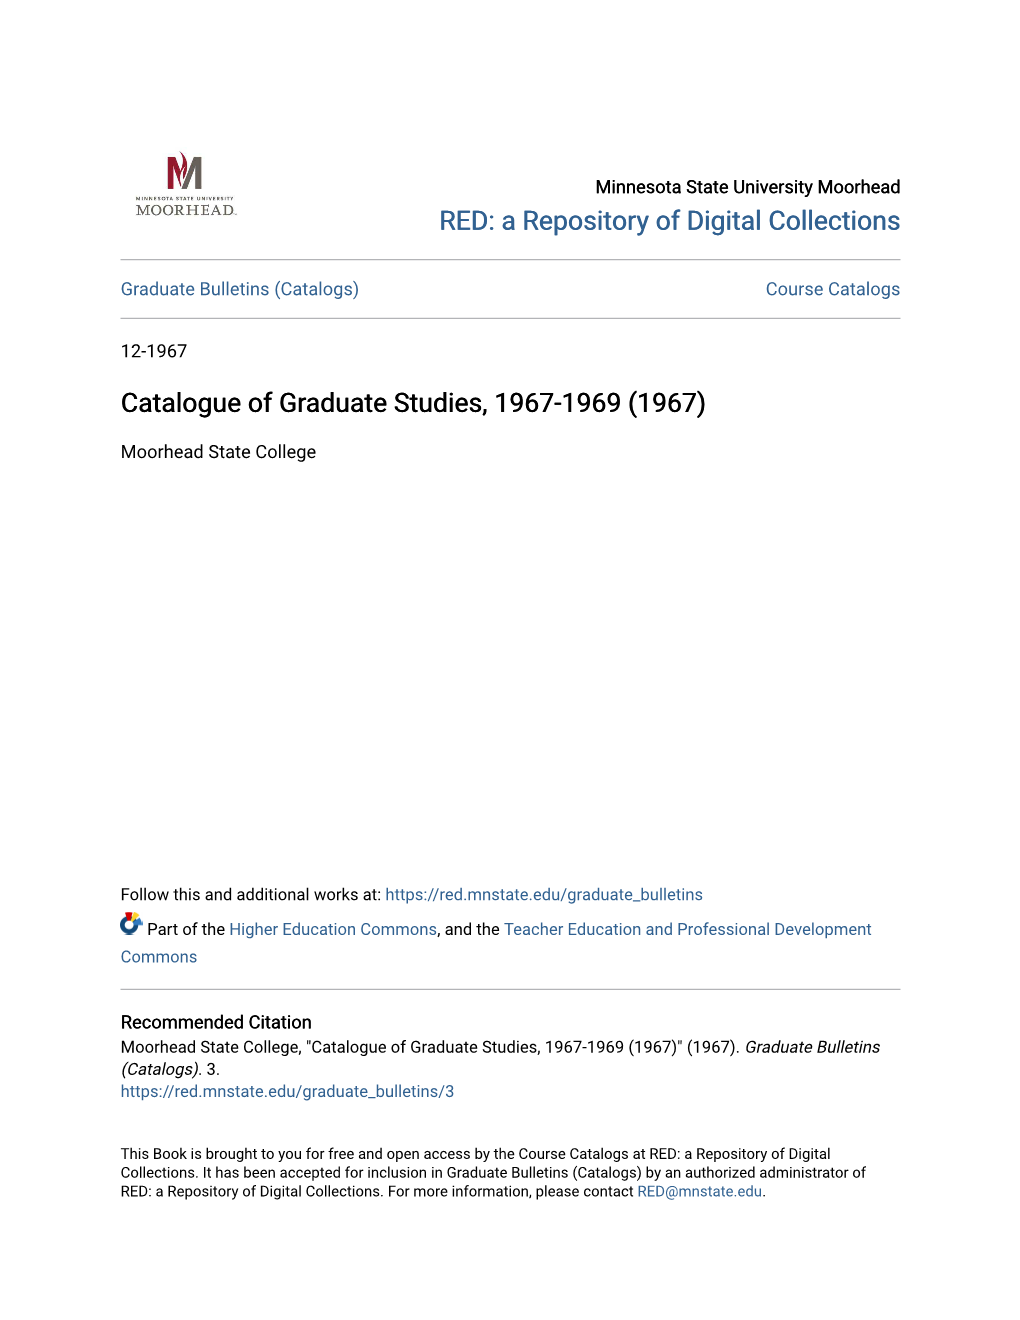 Catalogue of Graduate Studies, 1967-1969 (1967)